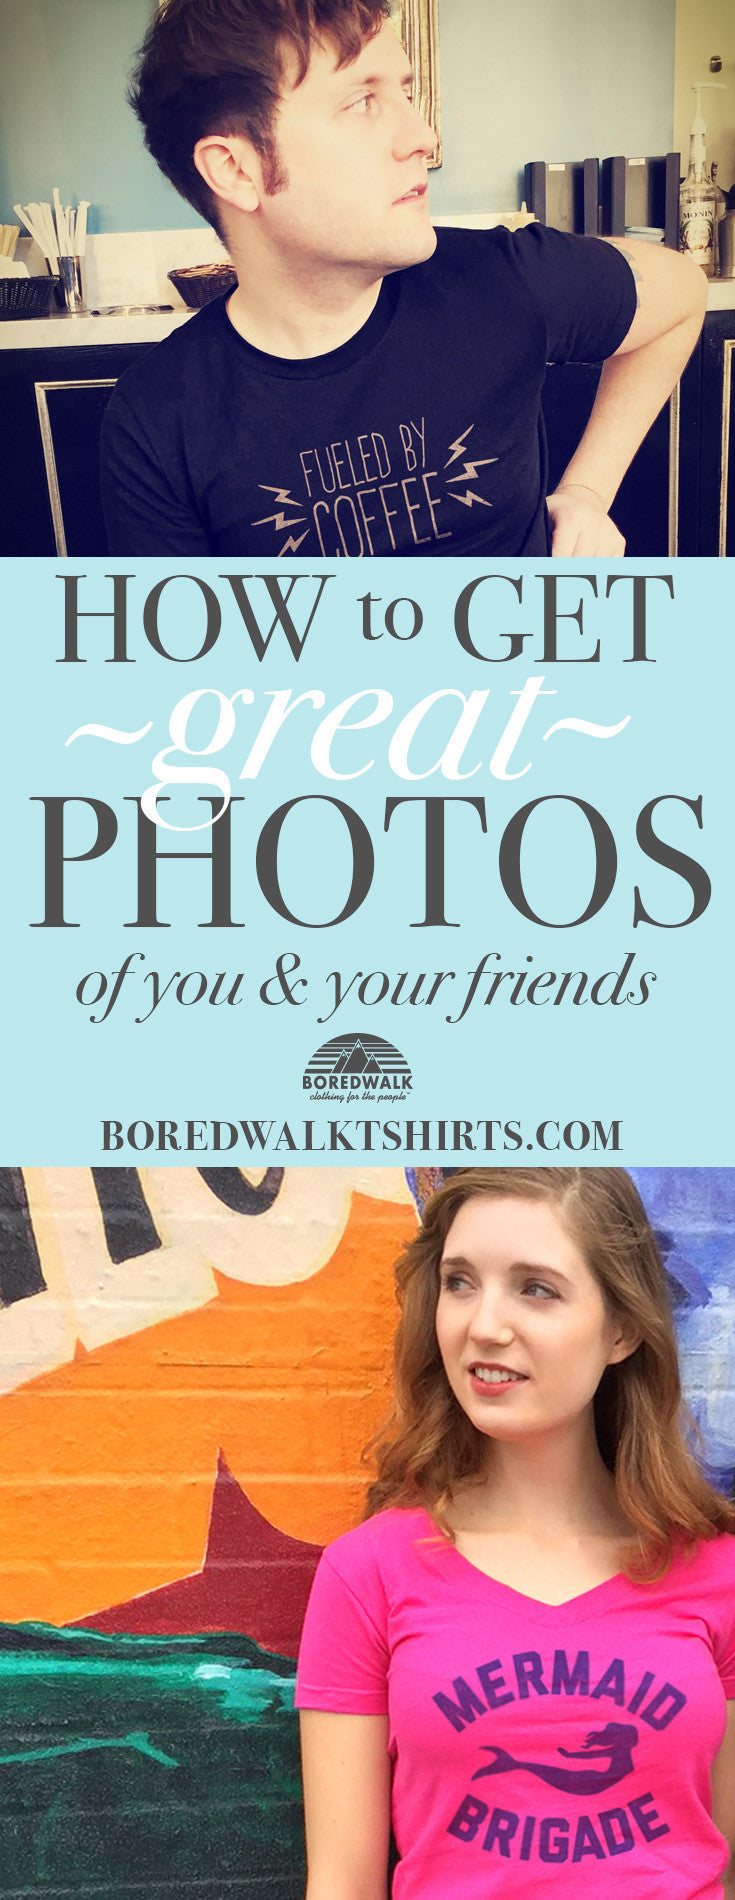 How to Get Good Pictures for Instagram, Facebook, OKCupid, Etc.